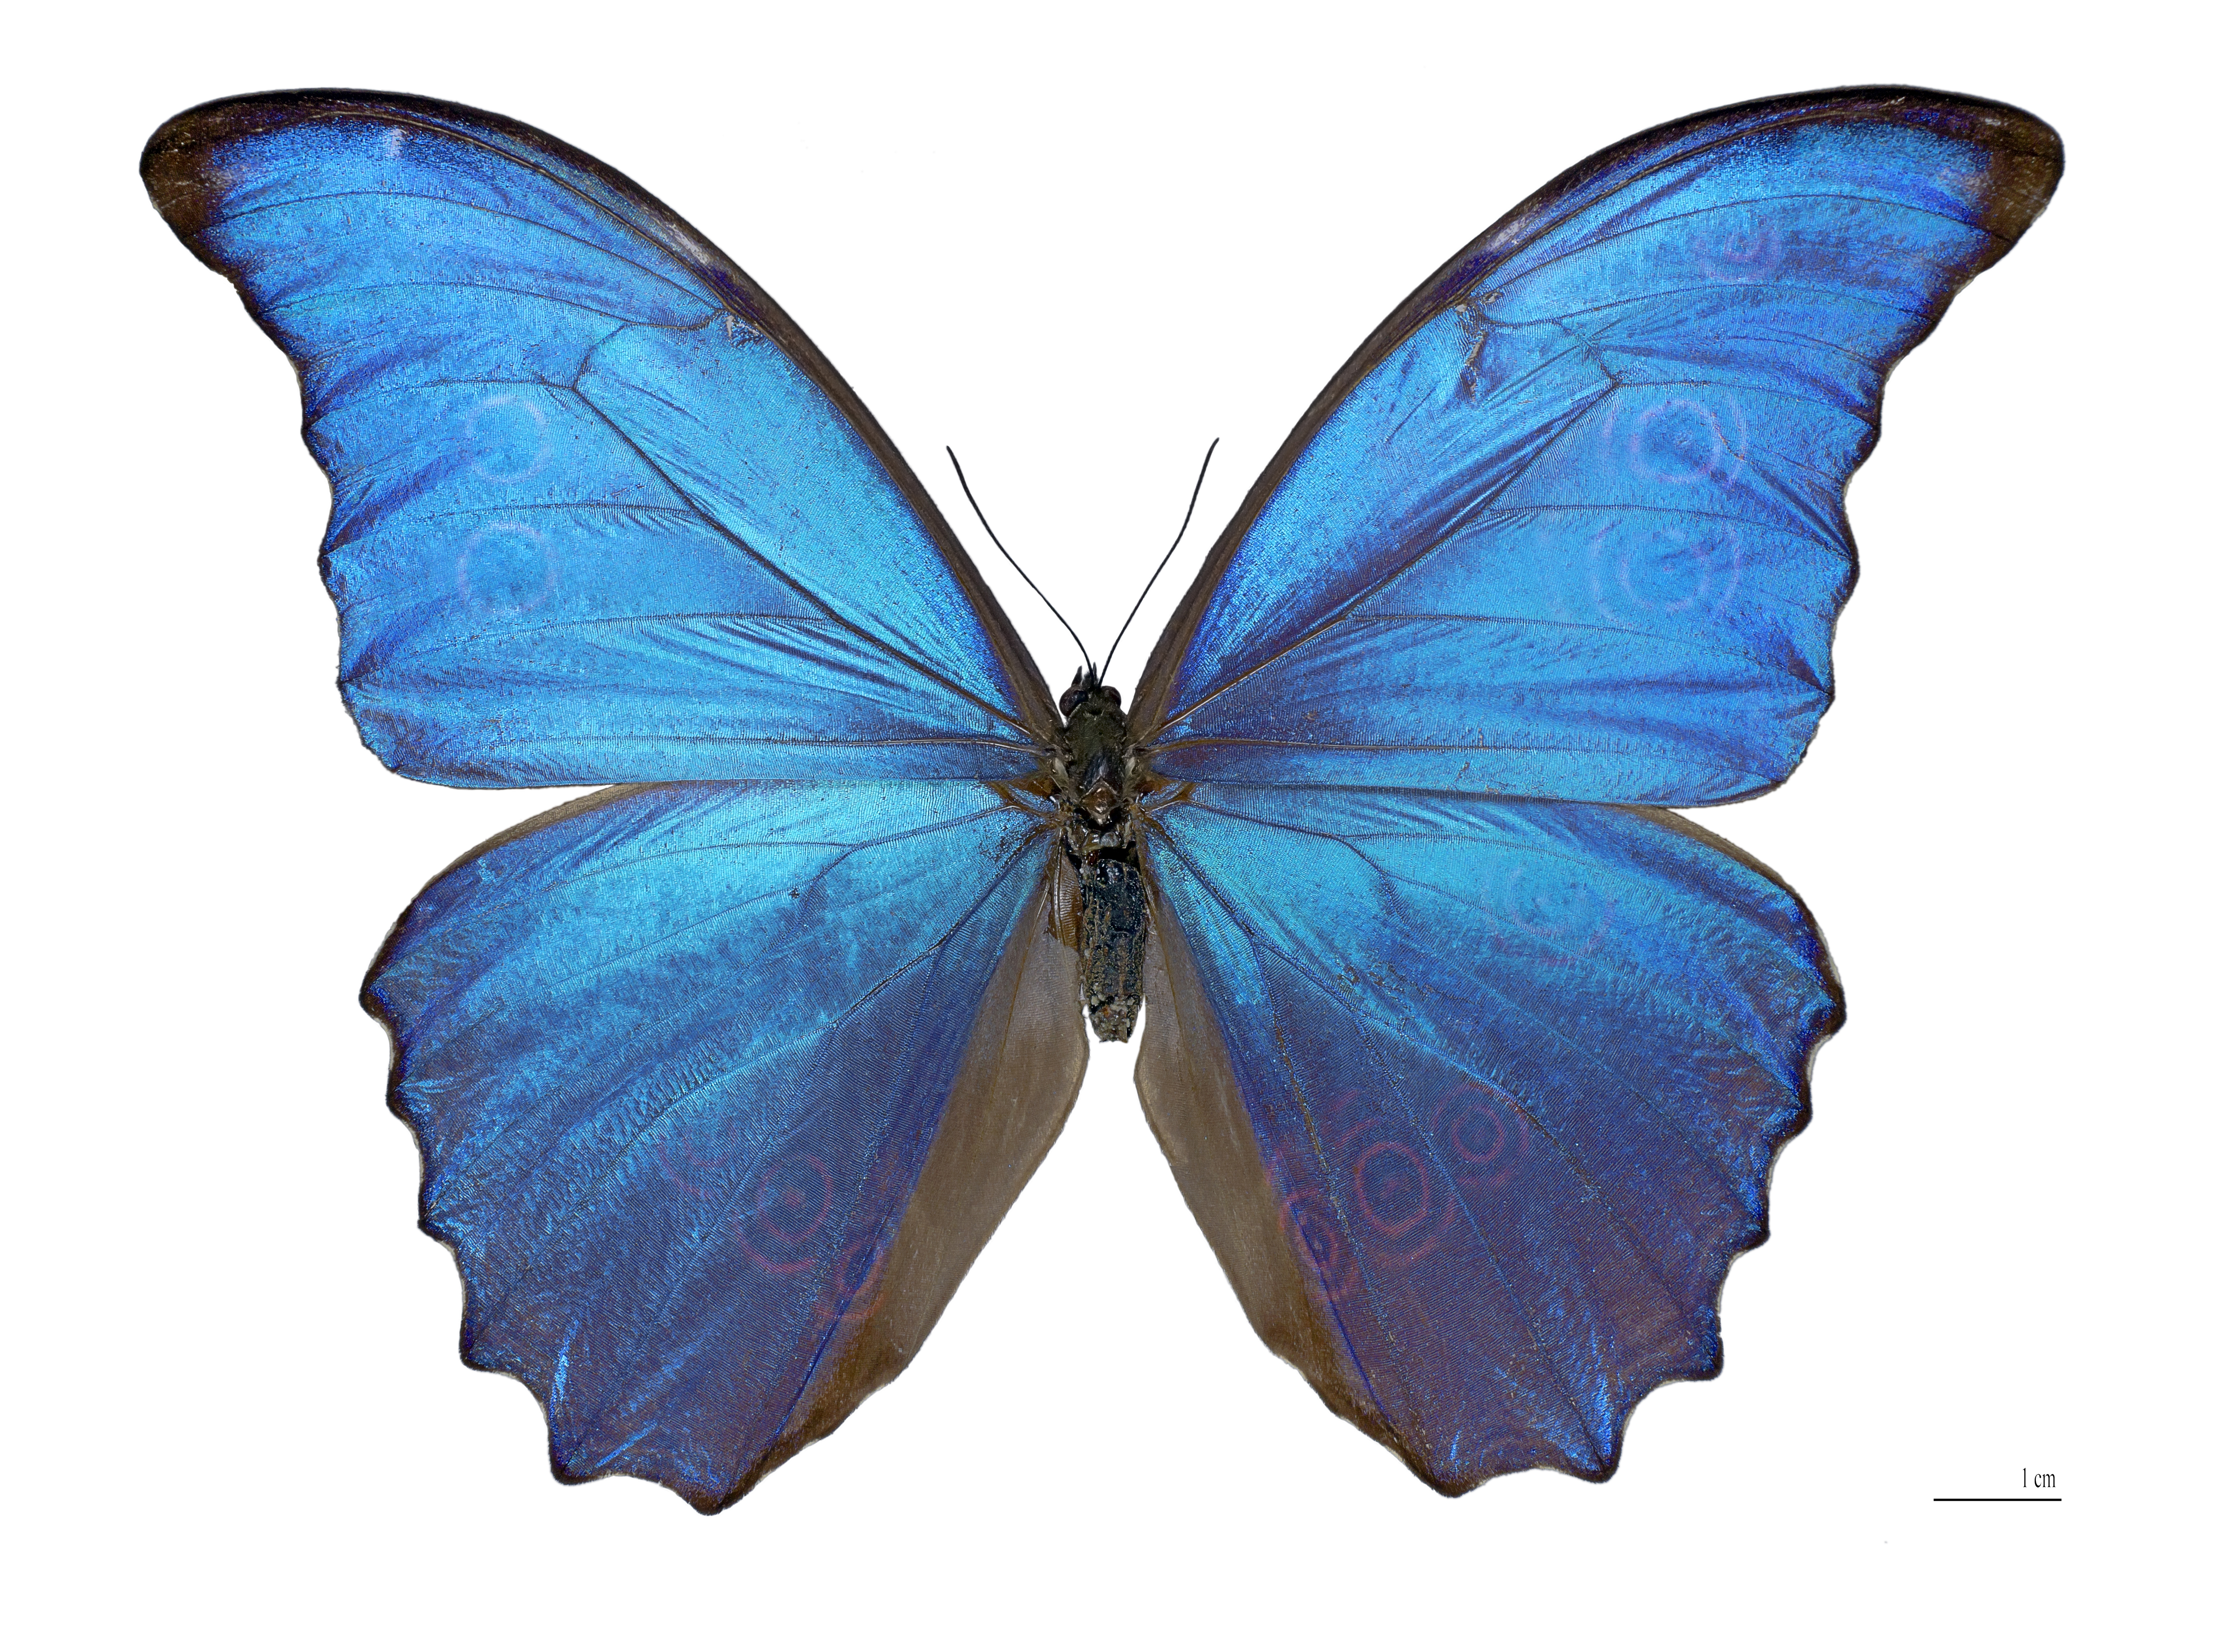 Damien Hirst's butterflies: distressing but weirdly uplifting ...